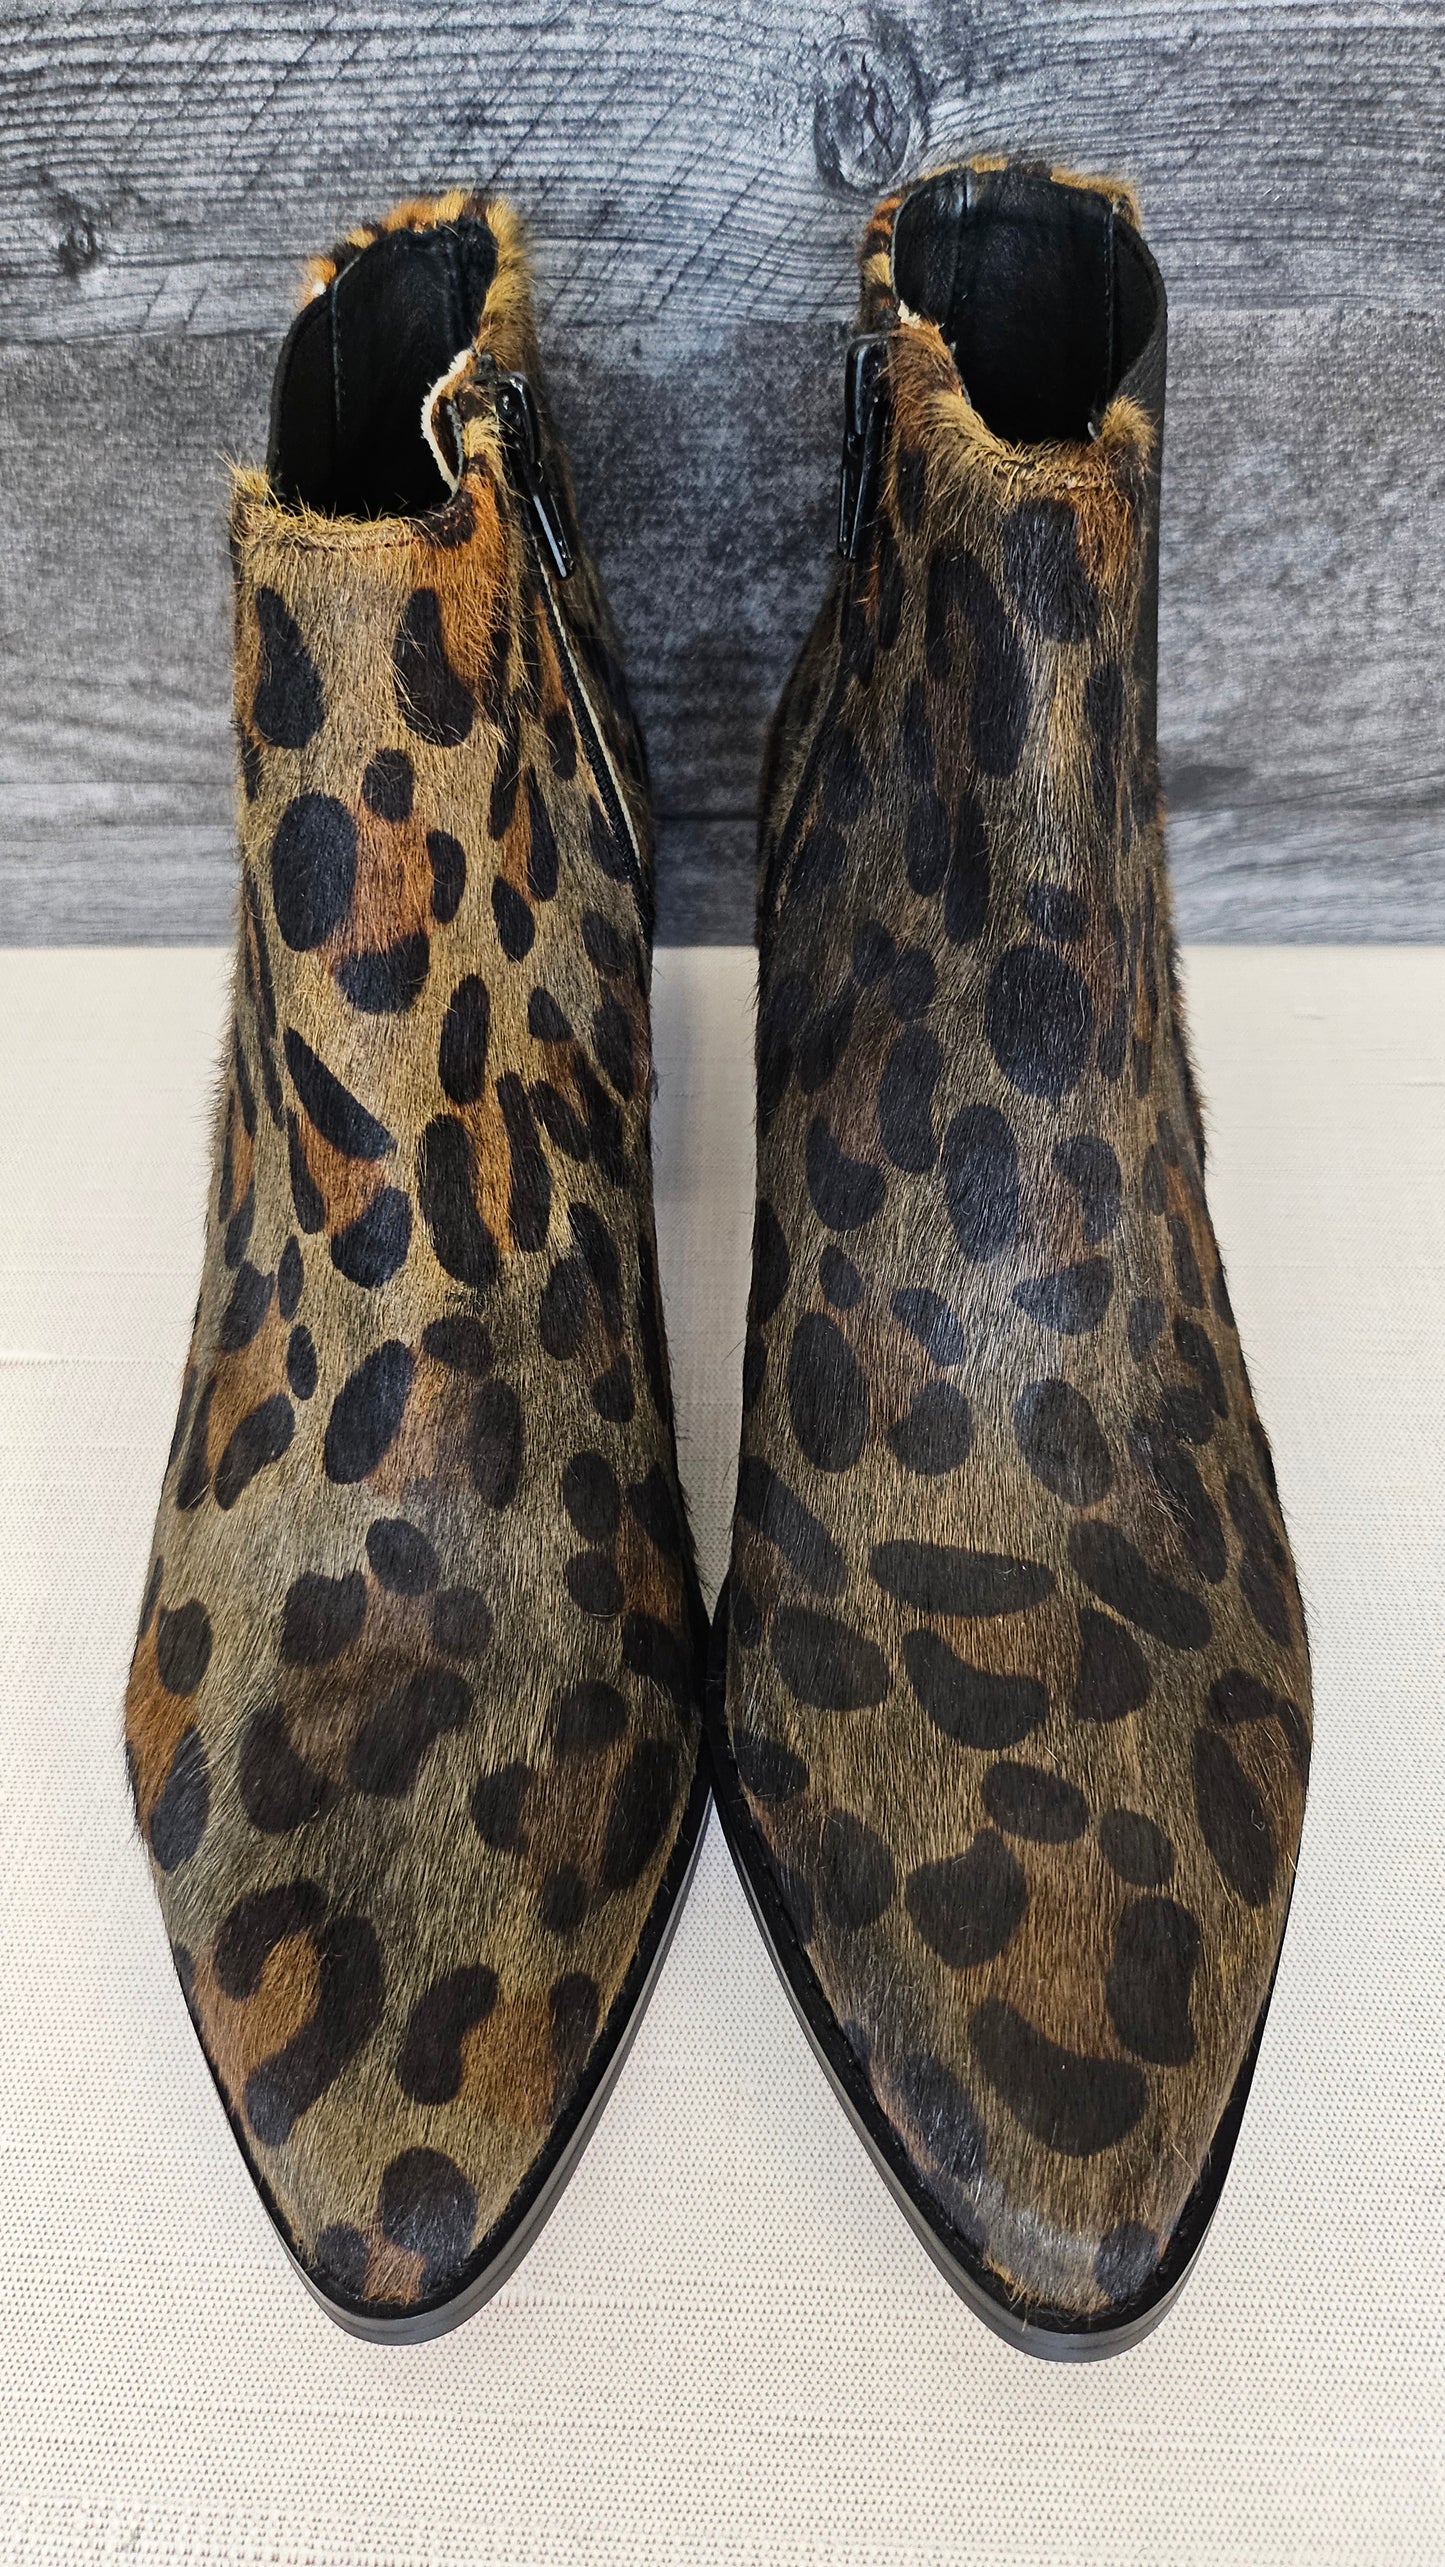 Isabella Anselmi  Leopard Print Boot (38)